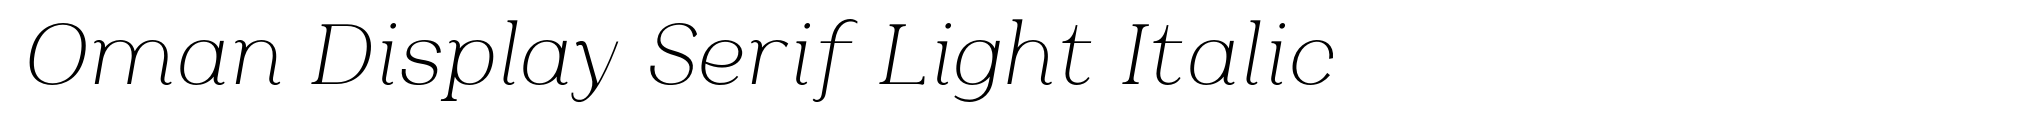 Oman Display Serif Light Italic image